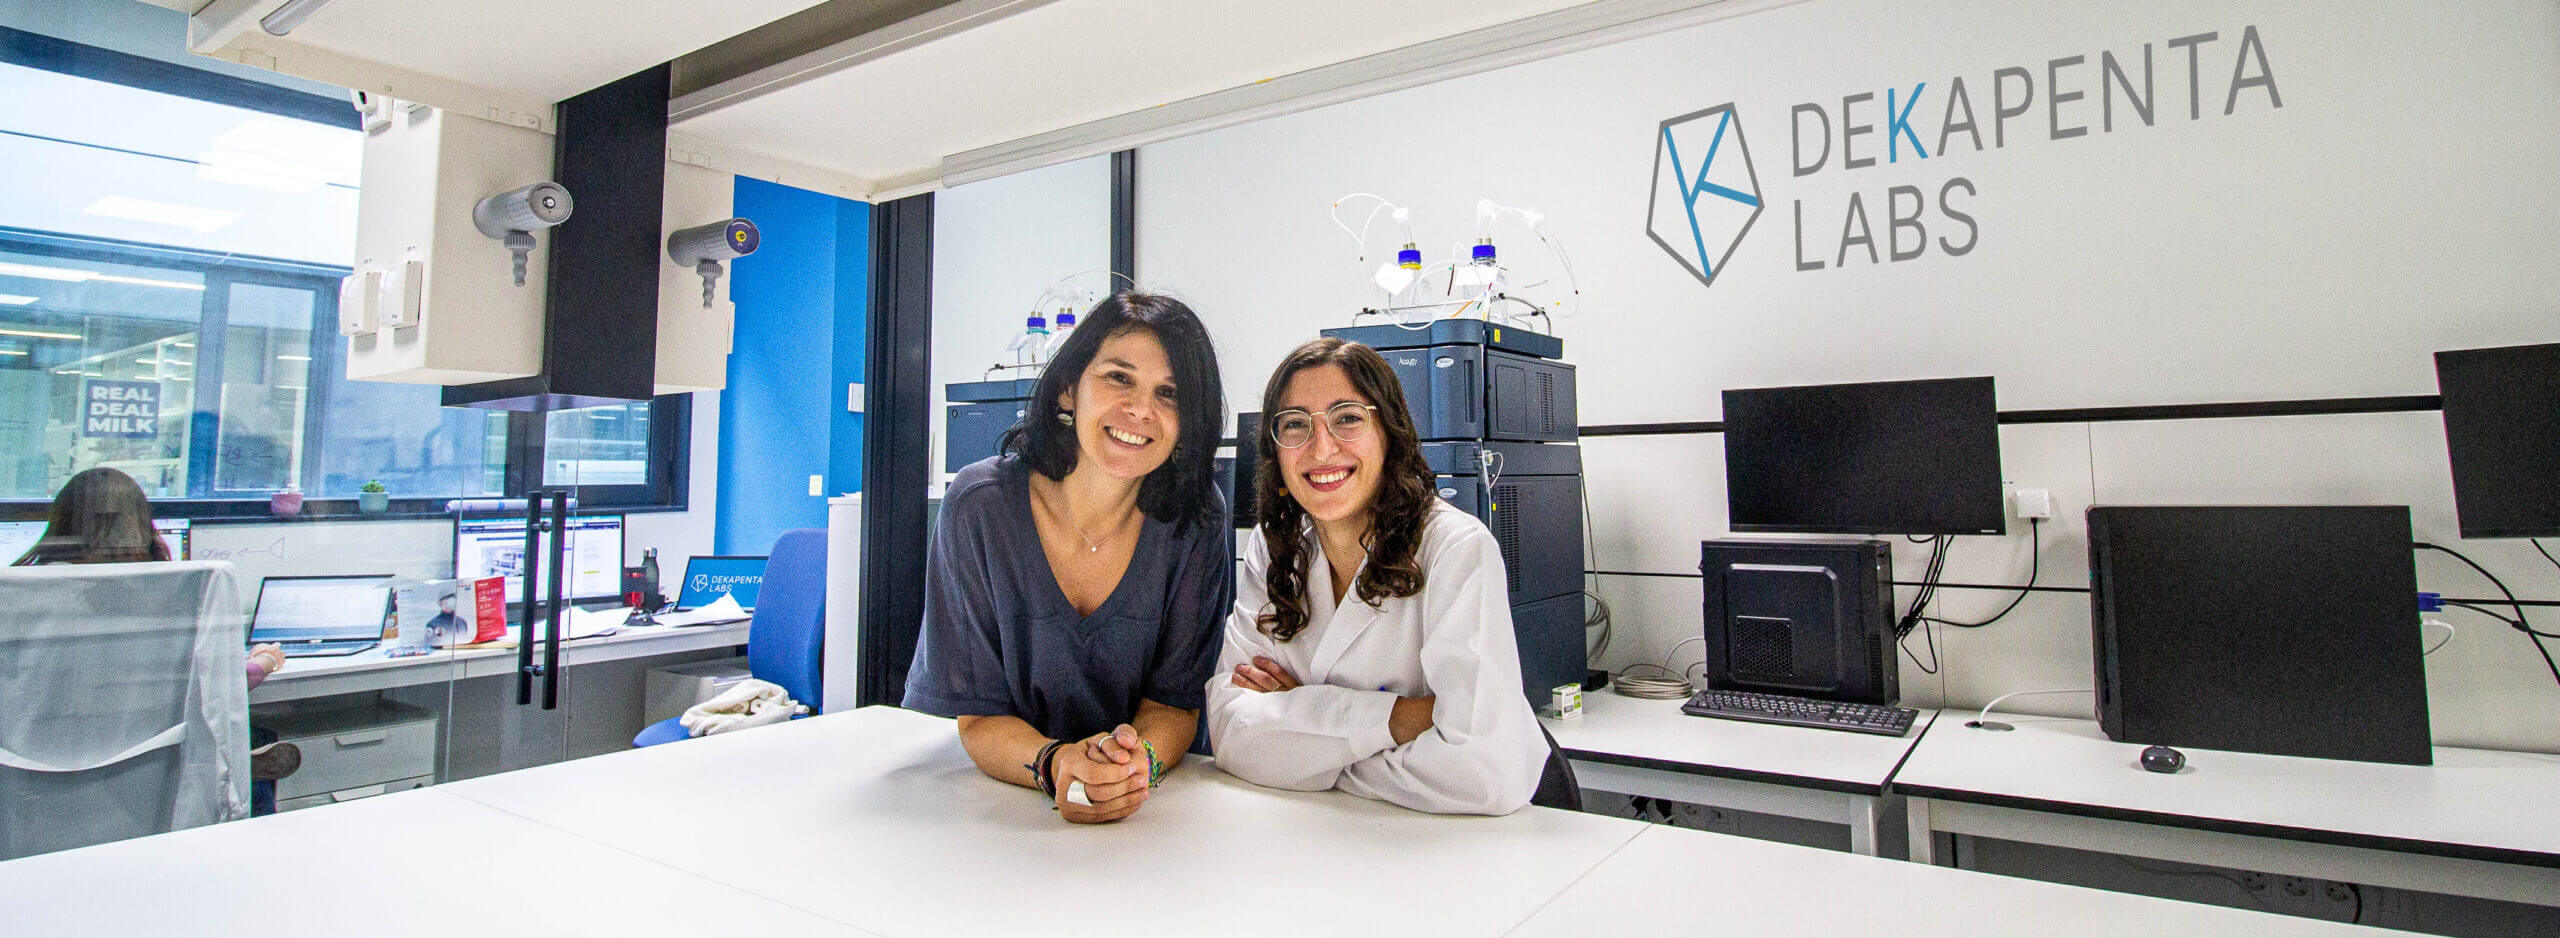 La CRO de serveis analítics Dekapenta Labs arrenca al Parc Científic de Barcelona